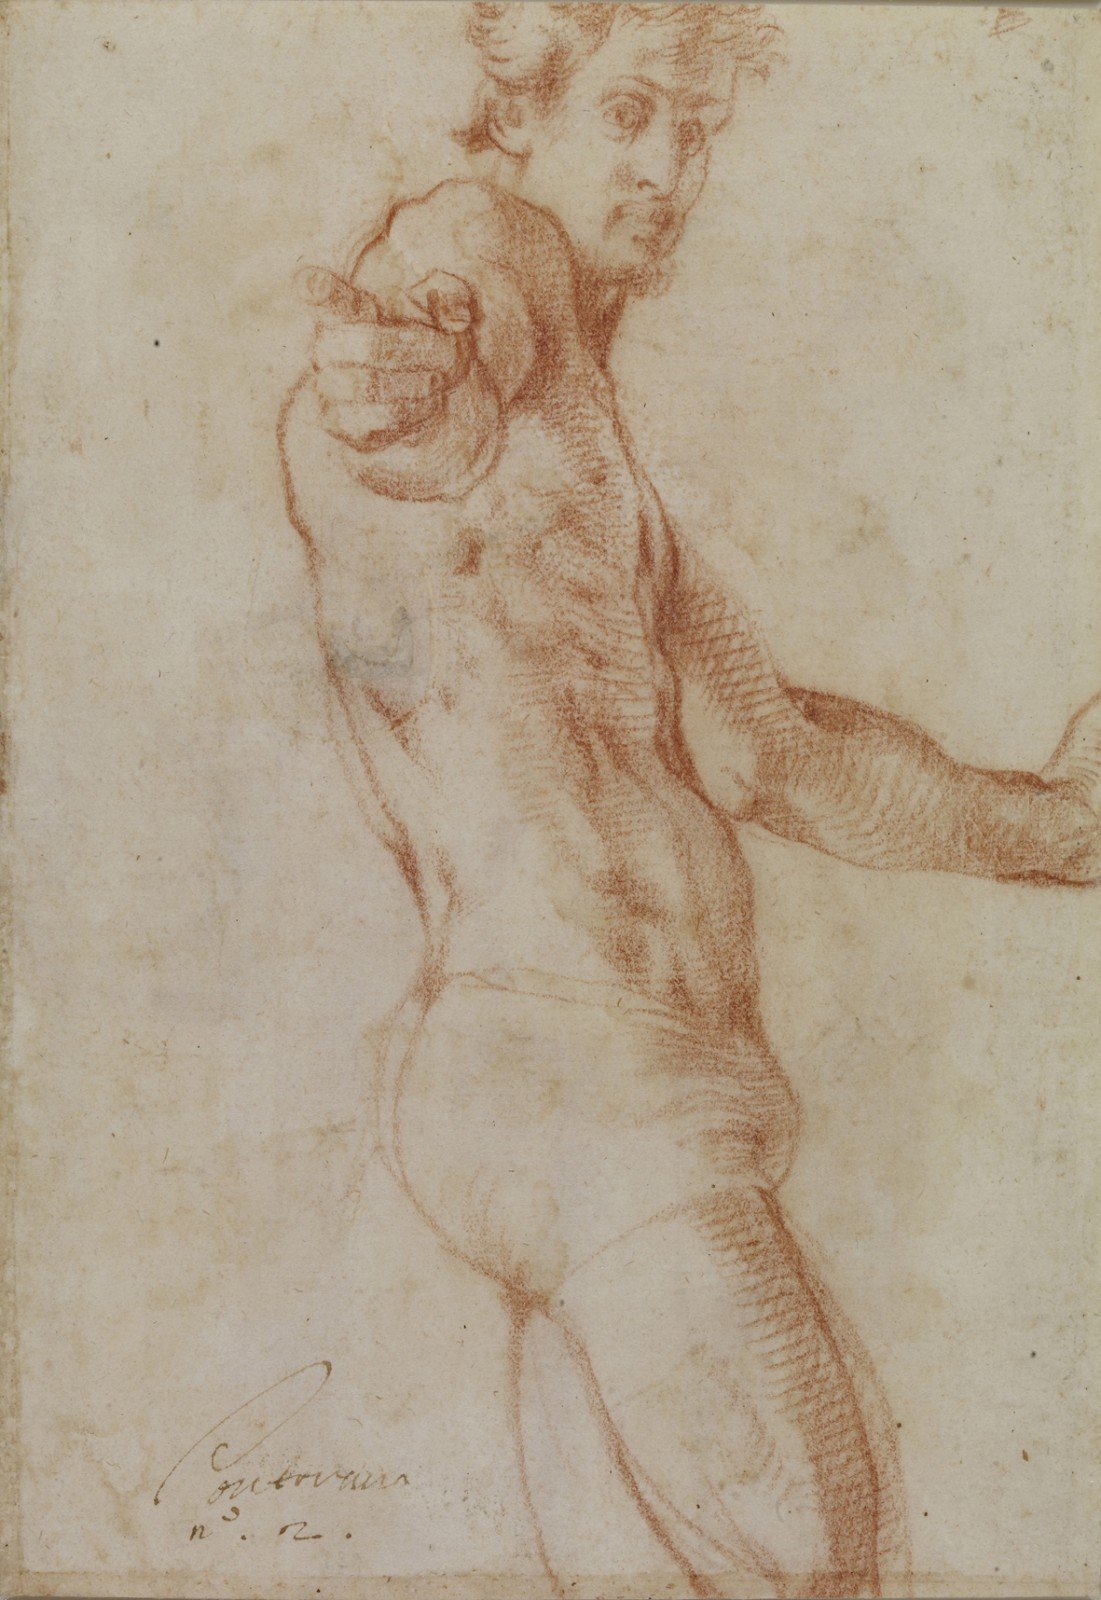 Pontormo (Jacopo Carucci; Pontorme, Empoli 1494 - Florence 1557), "Study of Nude (Self-Portrait?)", 1522-1525; sanguine on paper, 281 x 195 mm. London, The British Museum.